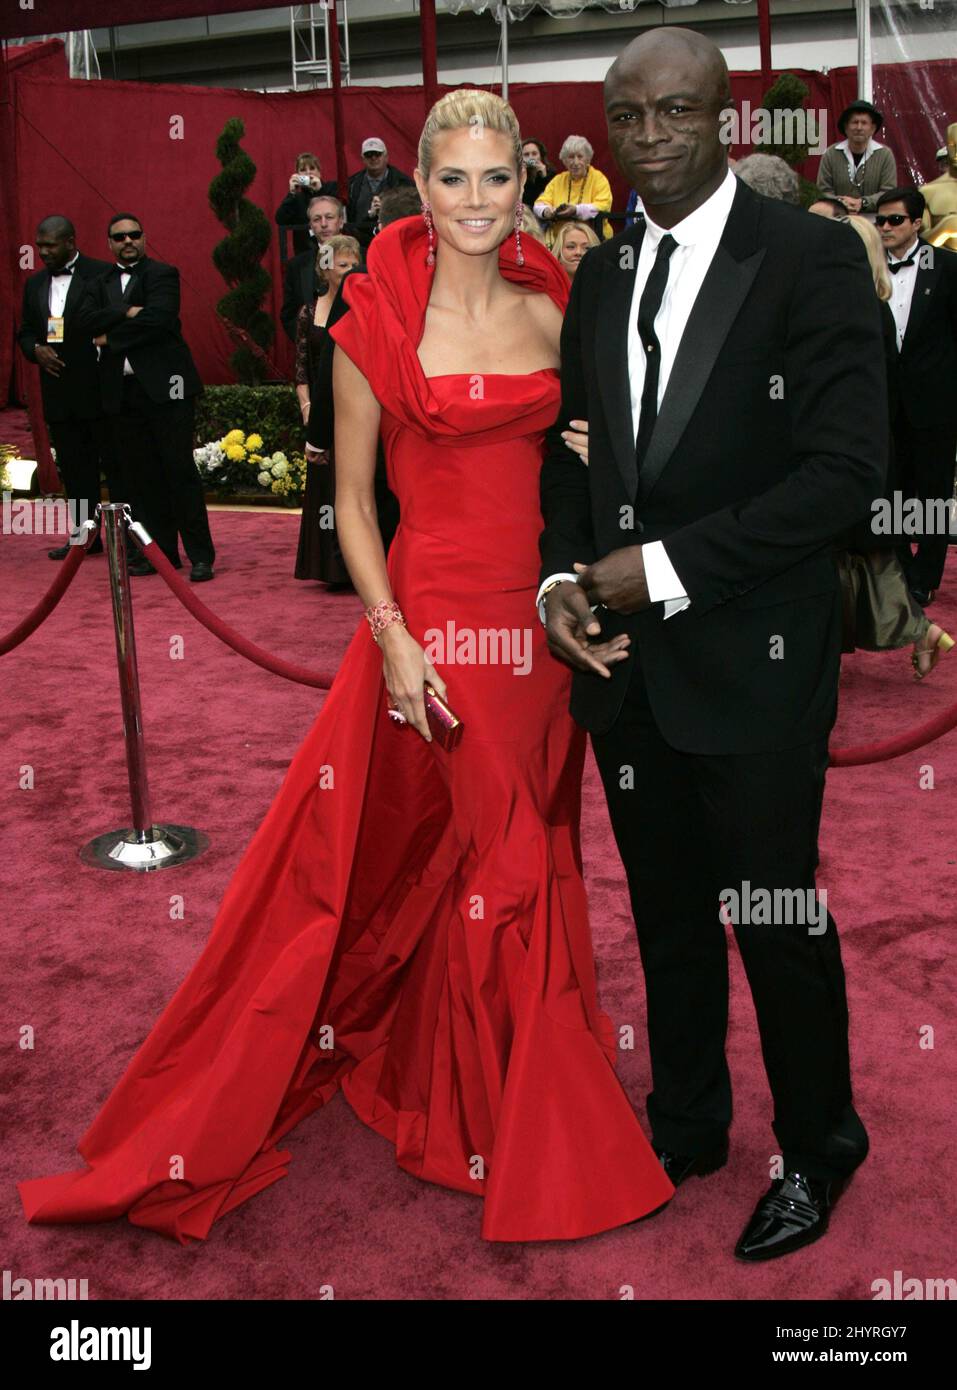 Heidi Klum and Seal arrive at the 80th Annual Academy Awards (oscars) in Hollywood, California. Stock Photo